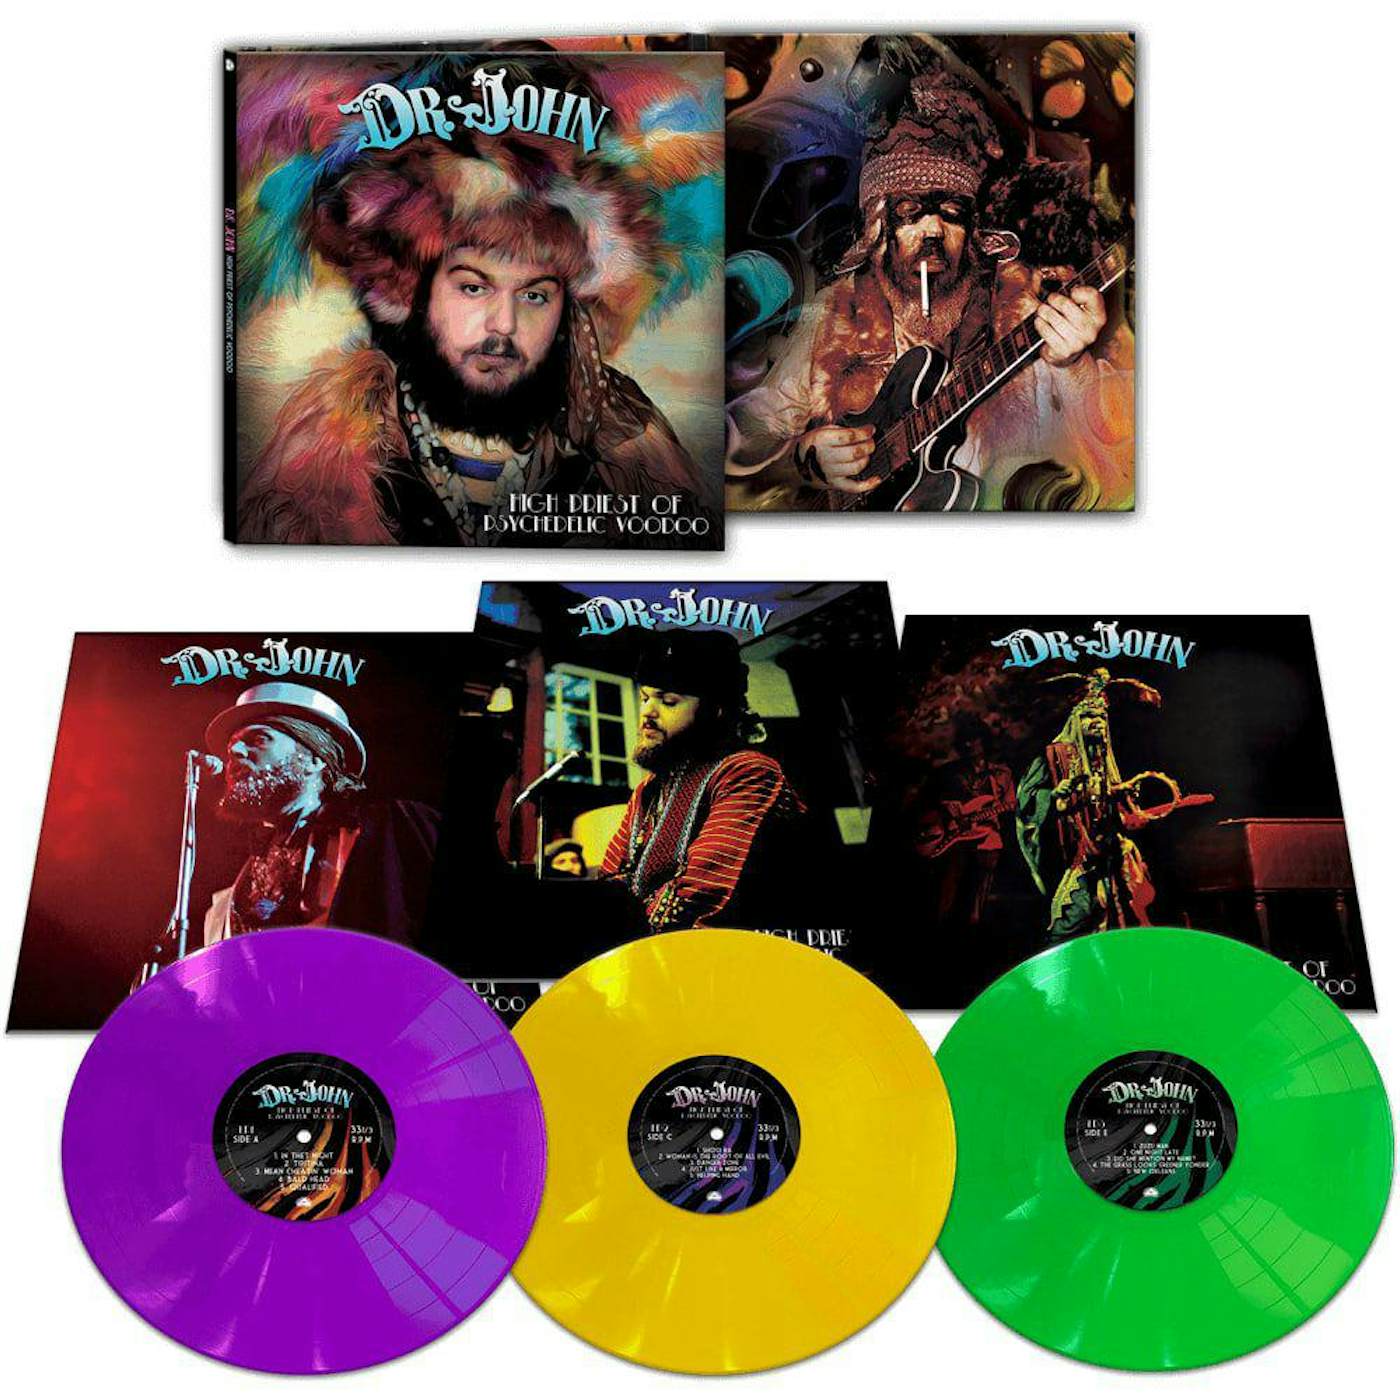 Dr. John High Priest Of Psychedelic Voodoo (Purple, Yellow, Green) Vinyl Record